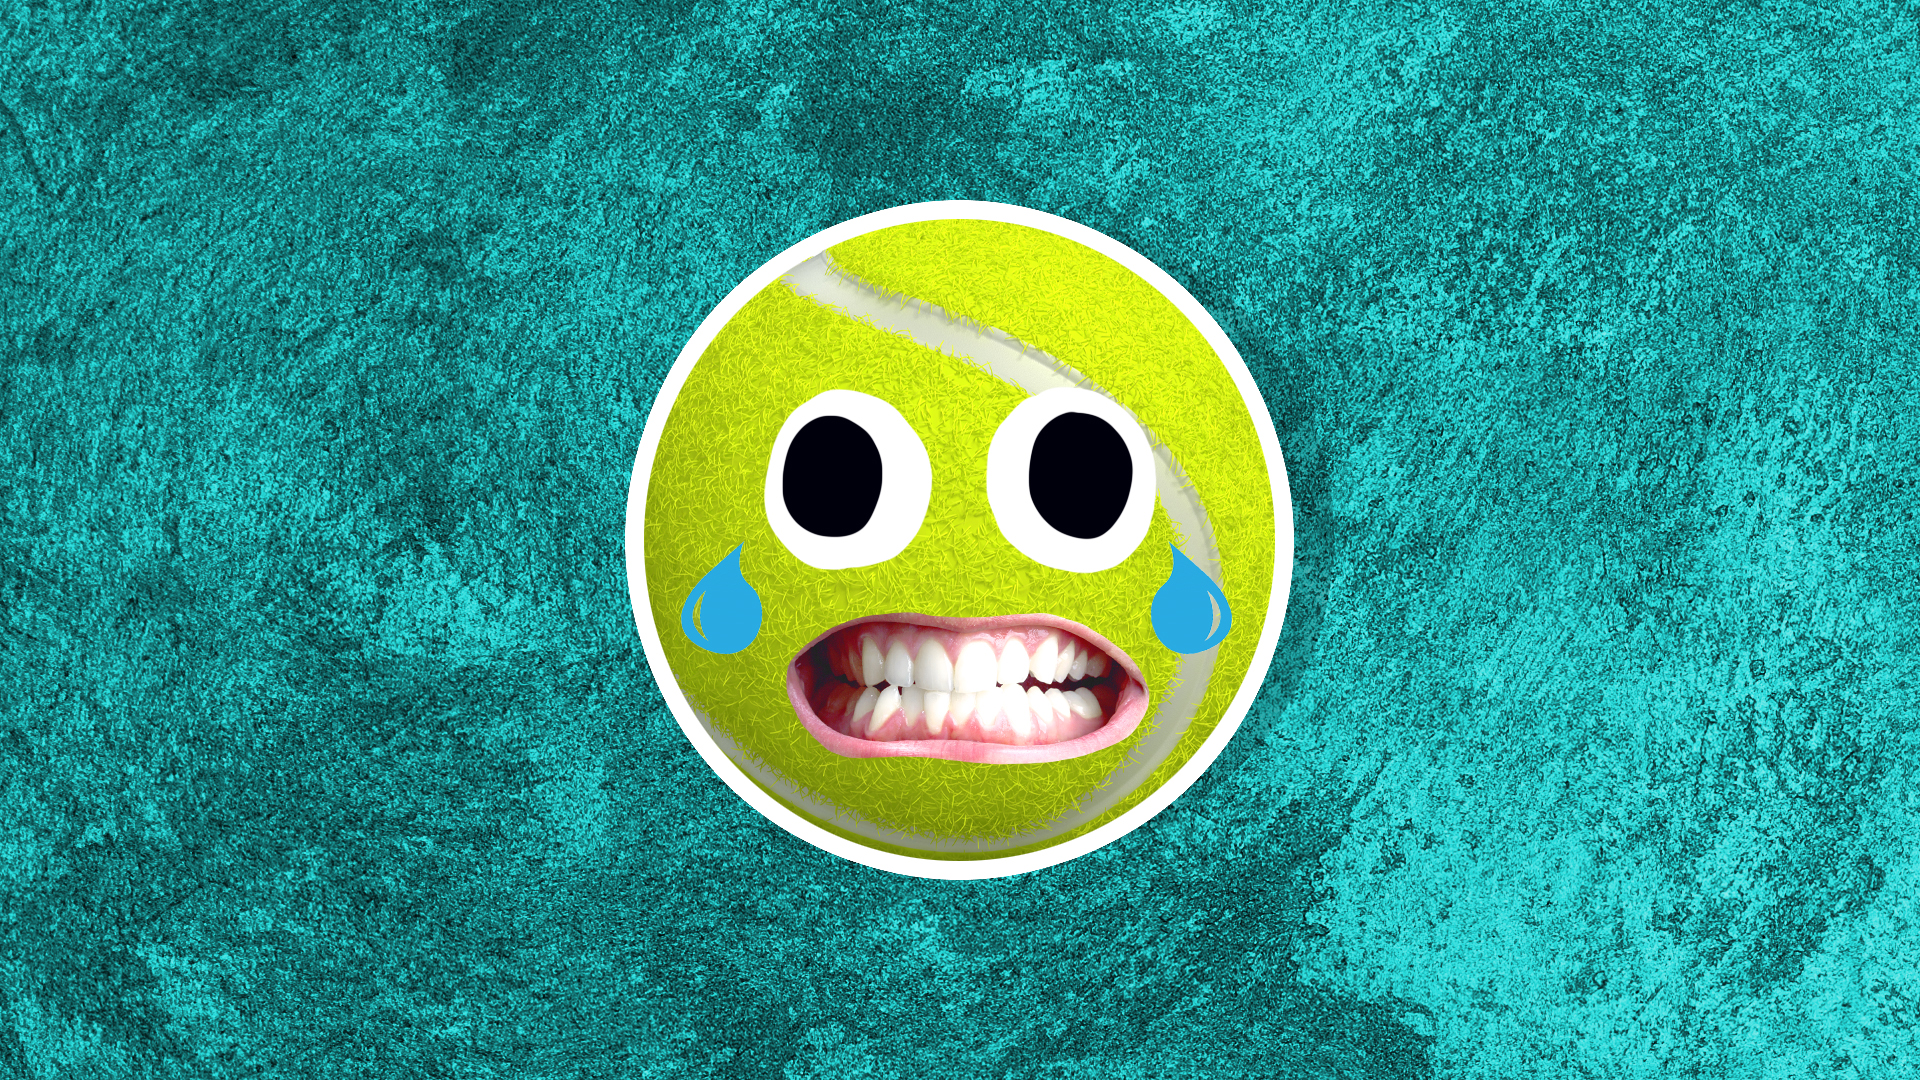 A smiling tennis ball